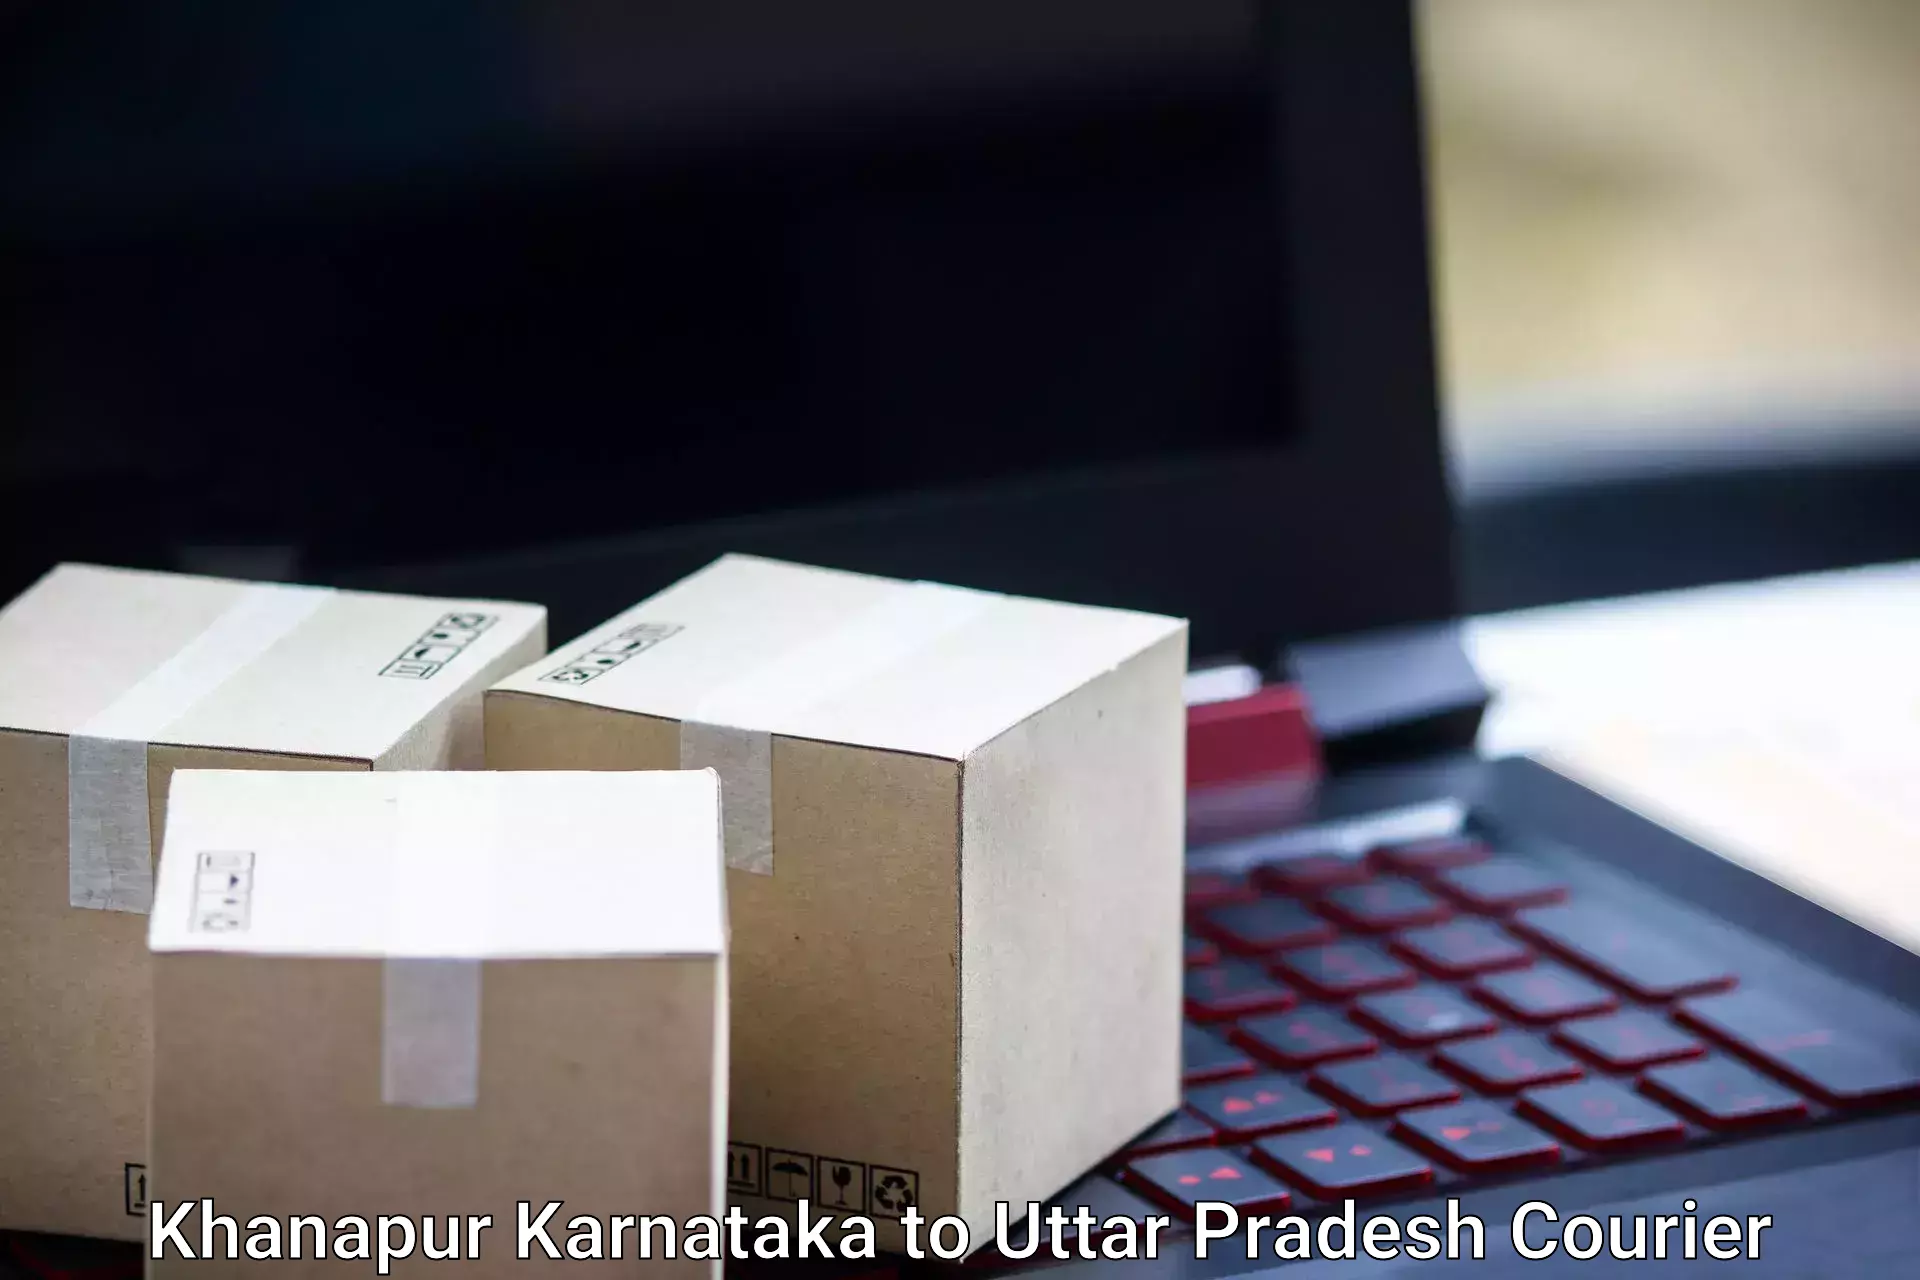 Baggage shipping service Khanapur Karnataka to Fatehpur